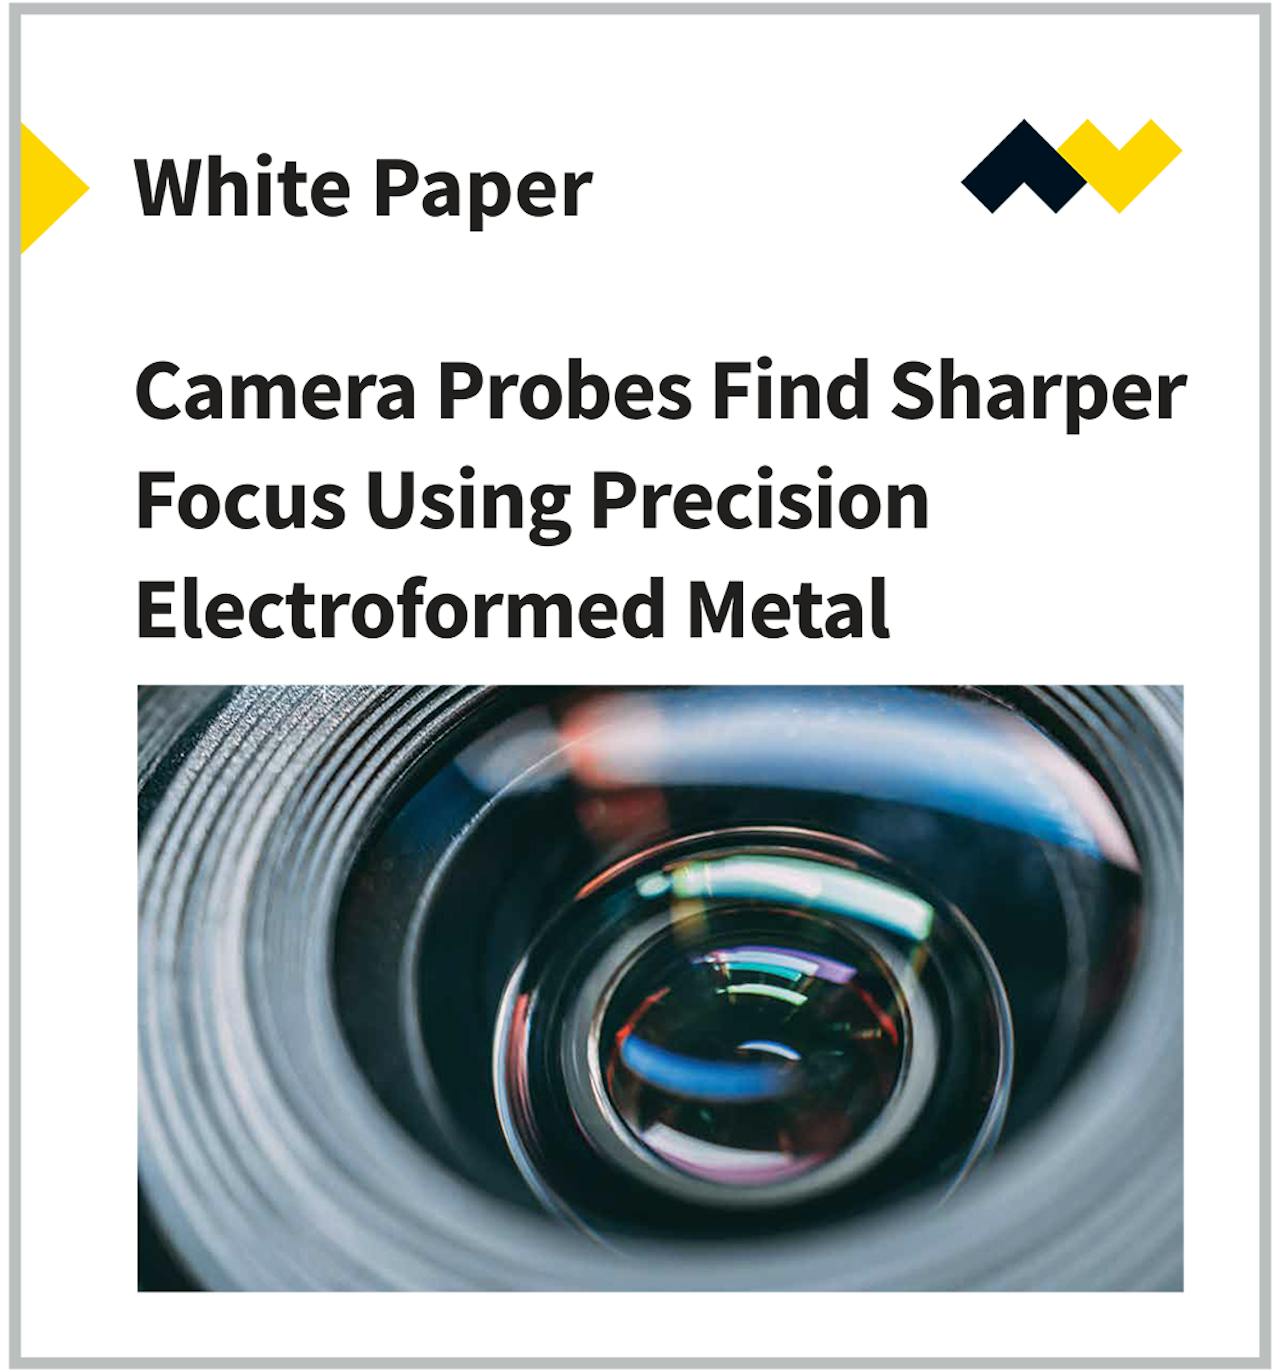 Camera Probes Find Sharper Focus Using Precision Electroformed Metal